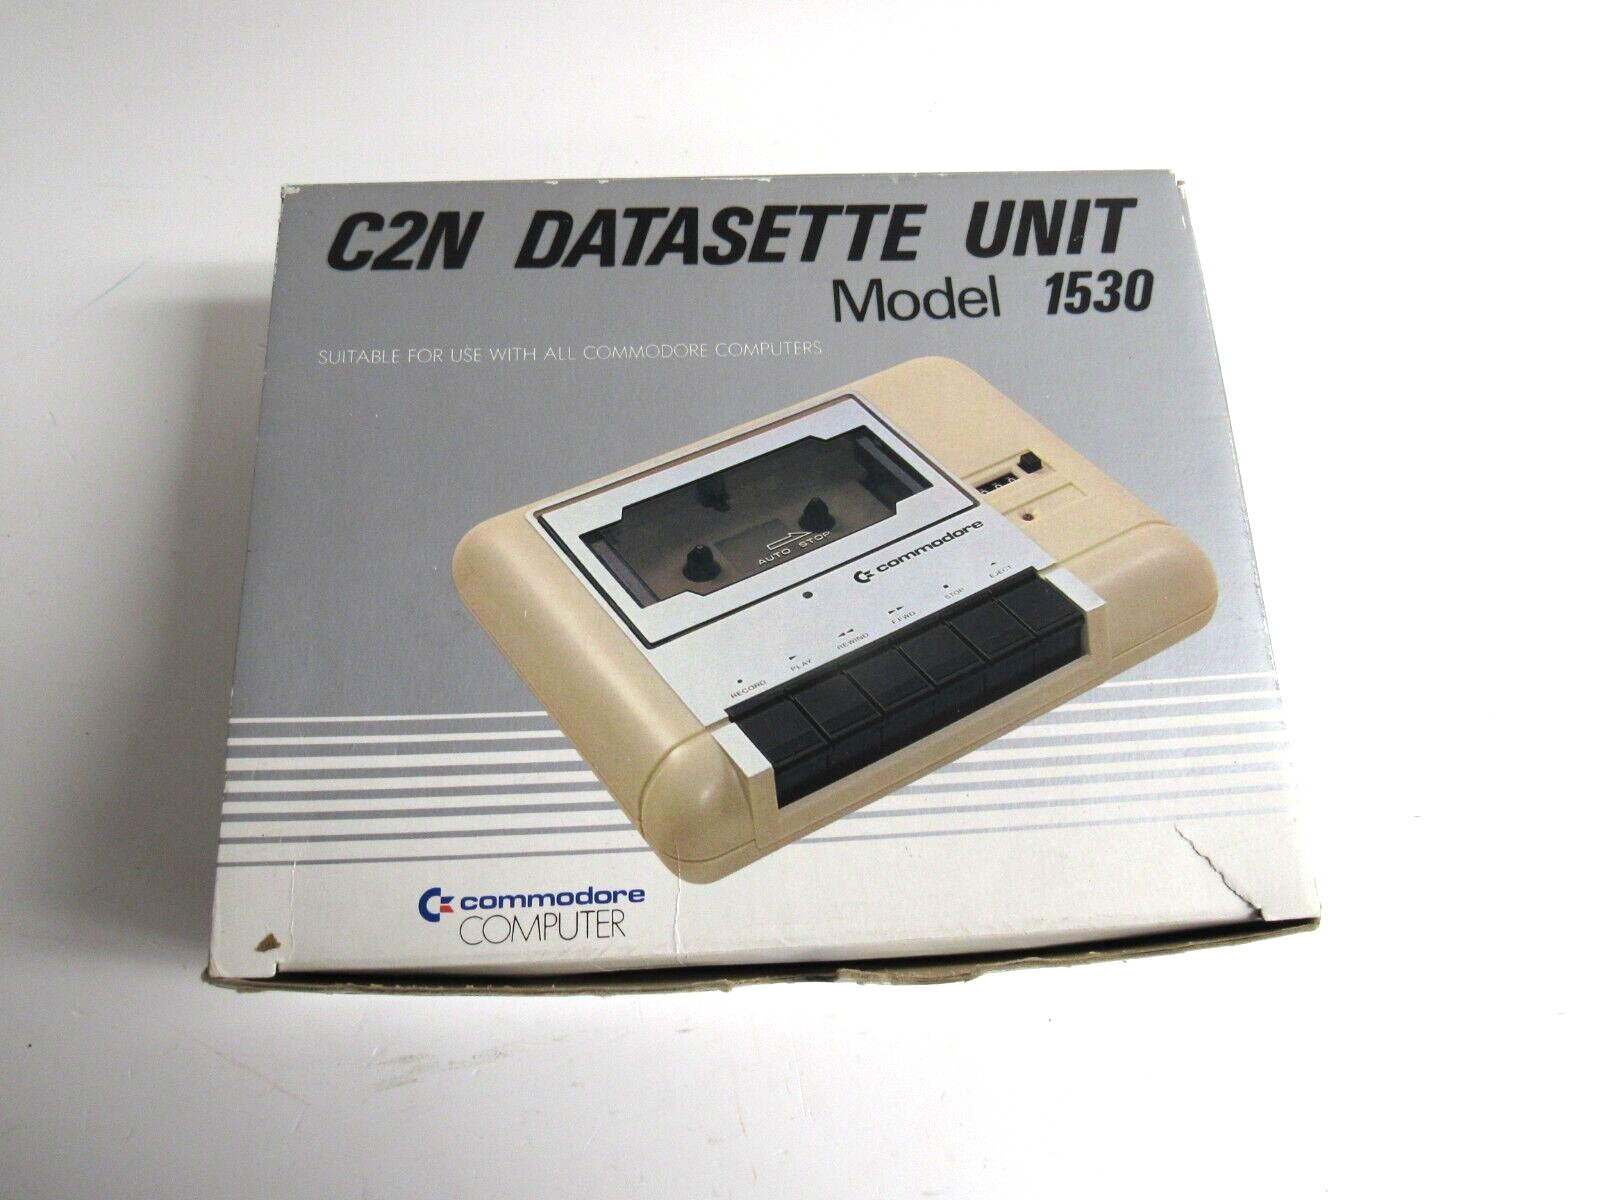 Commodore Computer C2N Datasette Unit Model 1530 w/Orig. Box